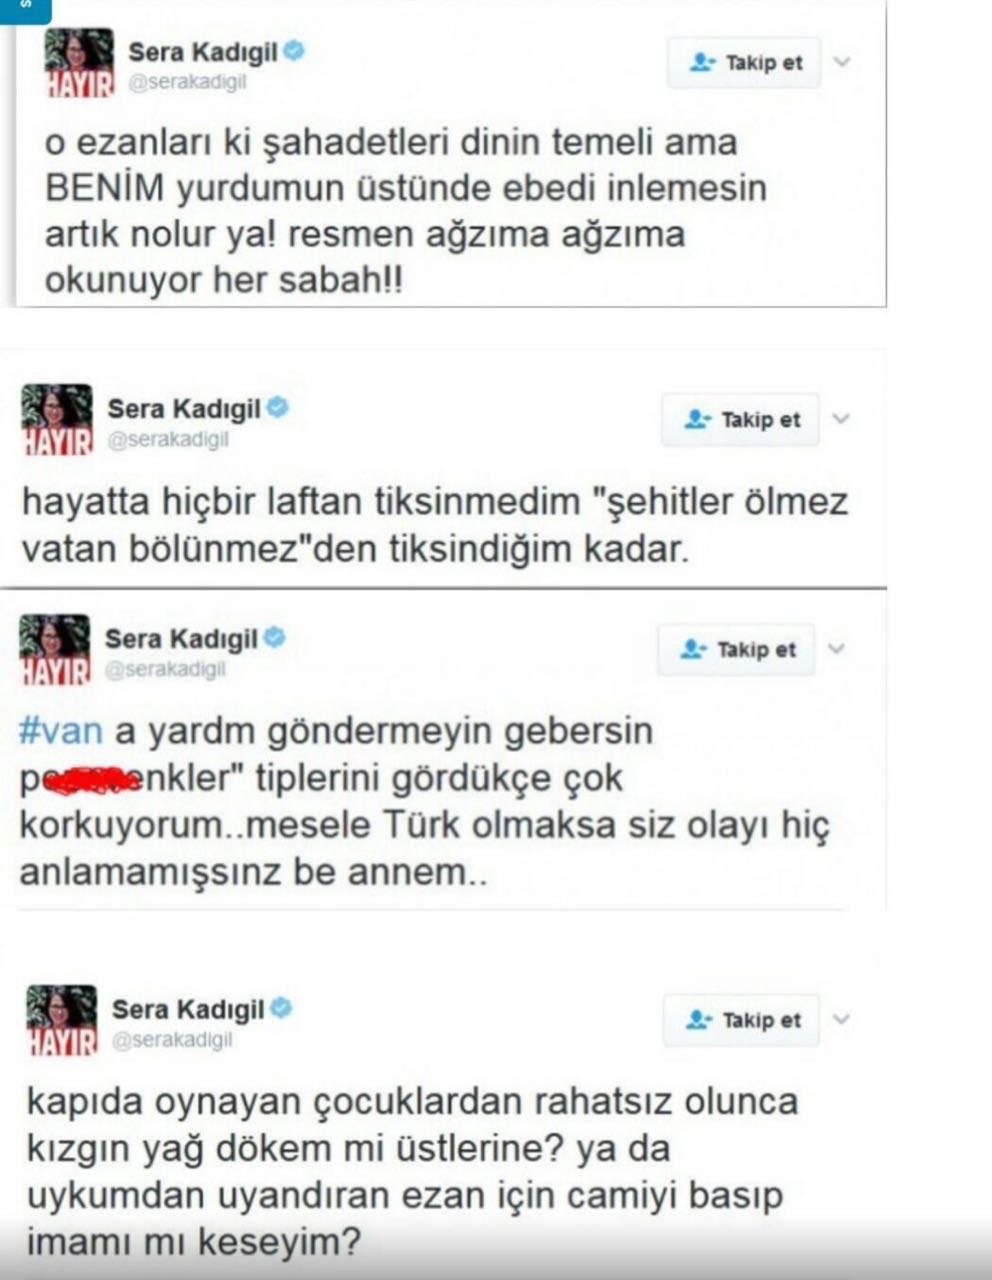 CHP PM üyesi Sera Kadıgil'den skandal paylaşımlar